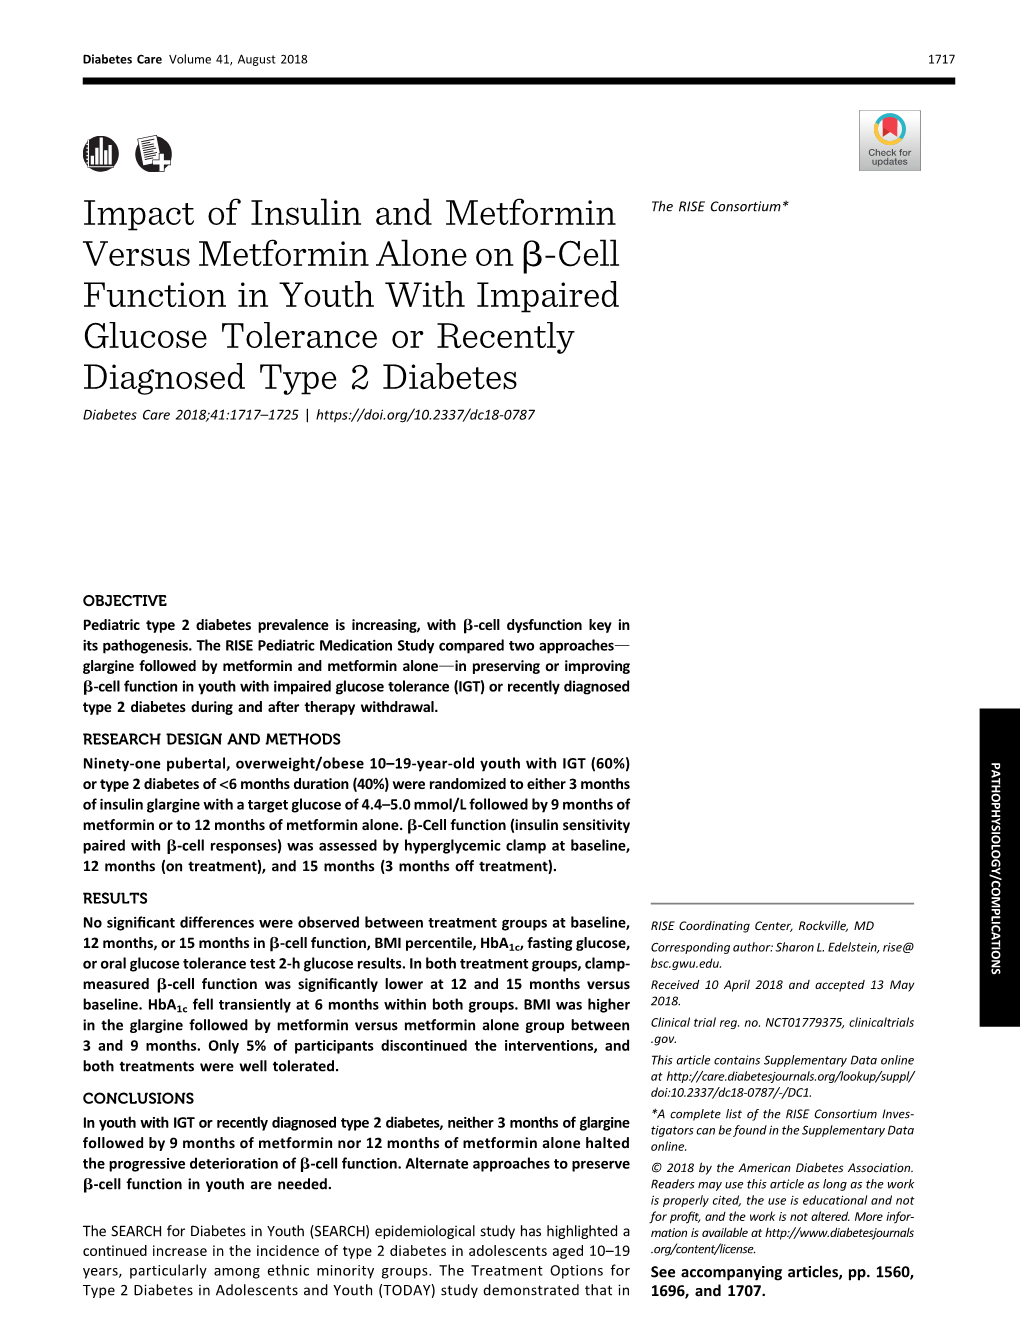 Impact of Insulin and Metformin Versus Metformin Alone on Β-Cell